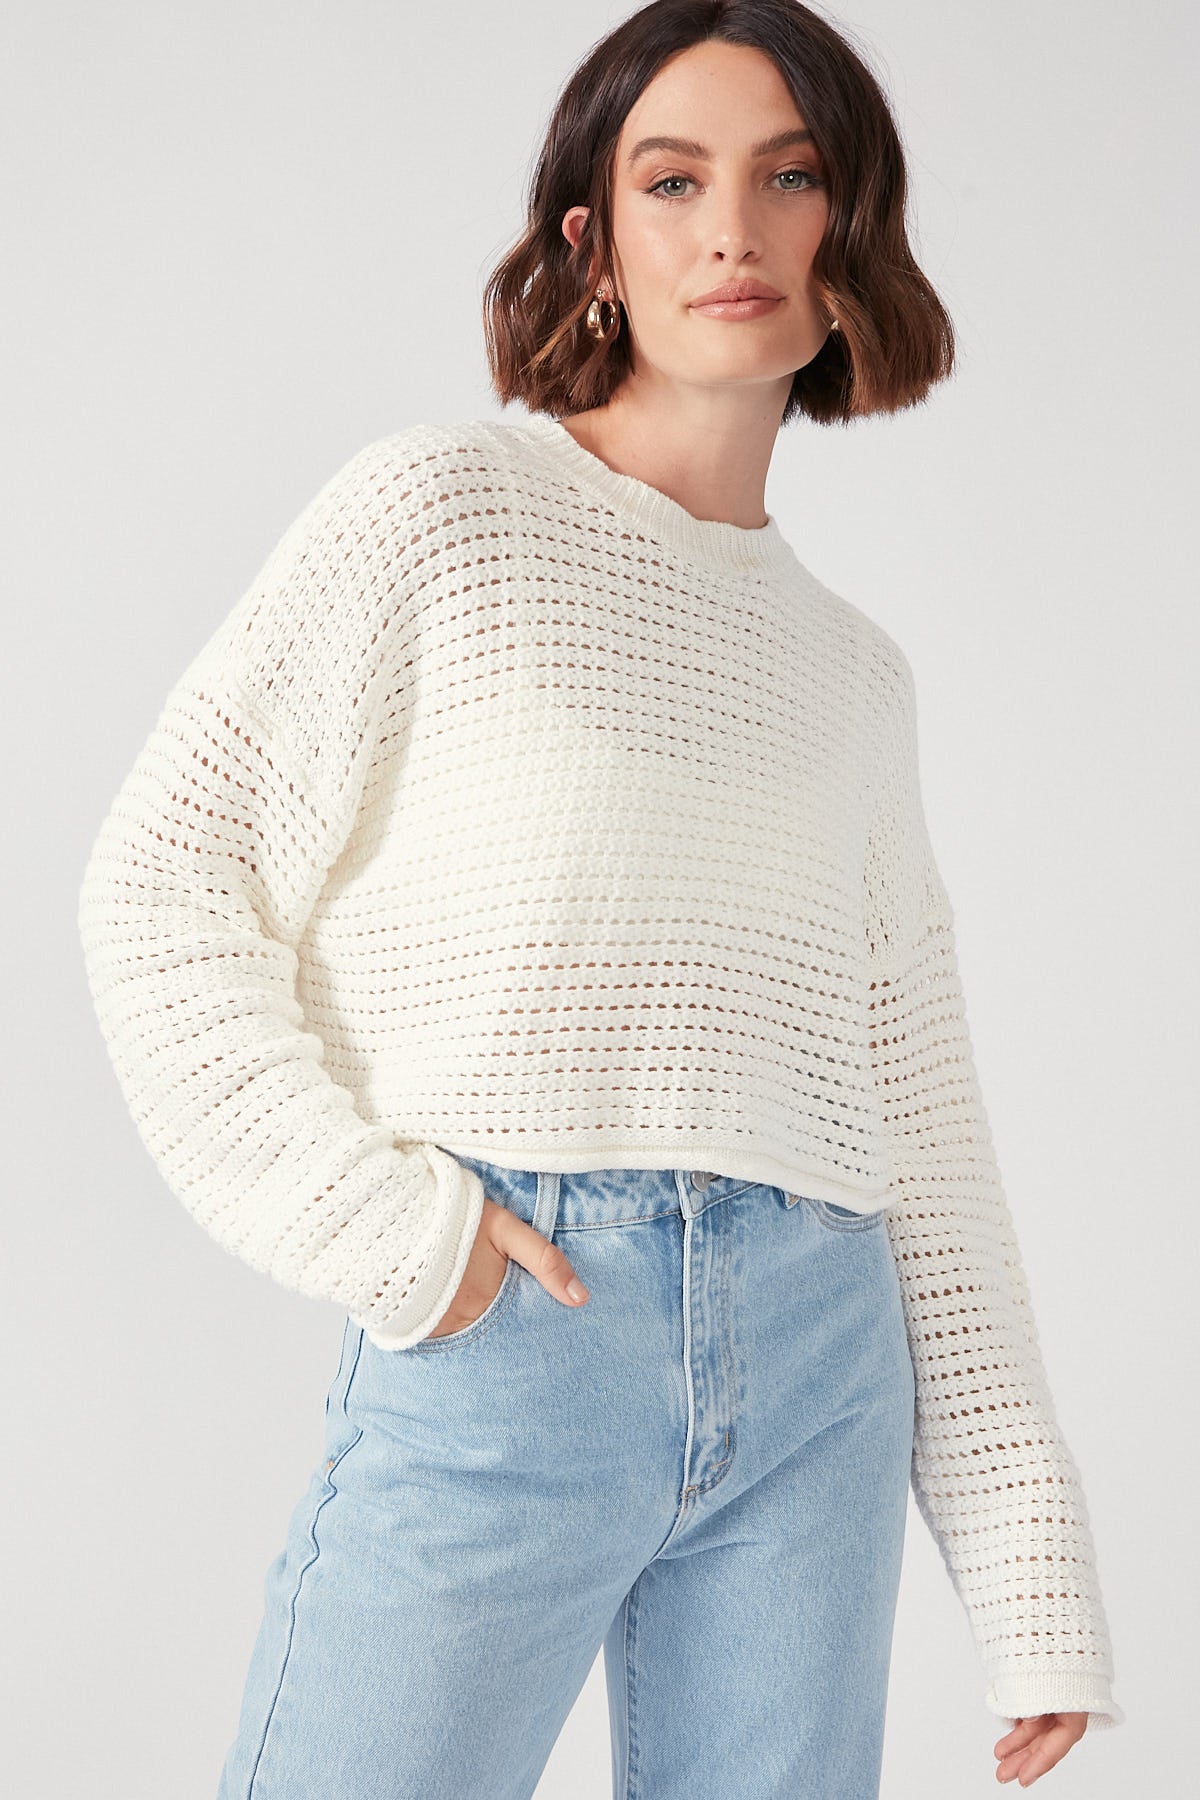 Perfect Stranger Crochet Everyday Sweater Cream